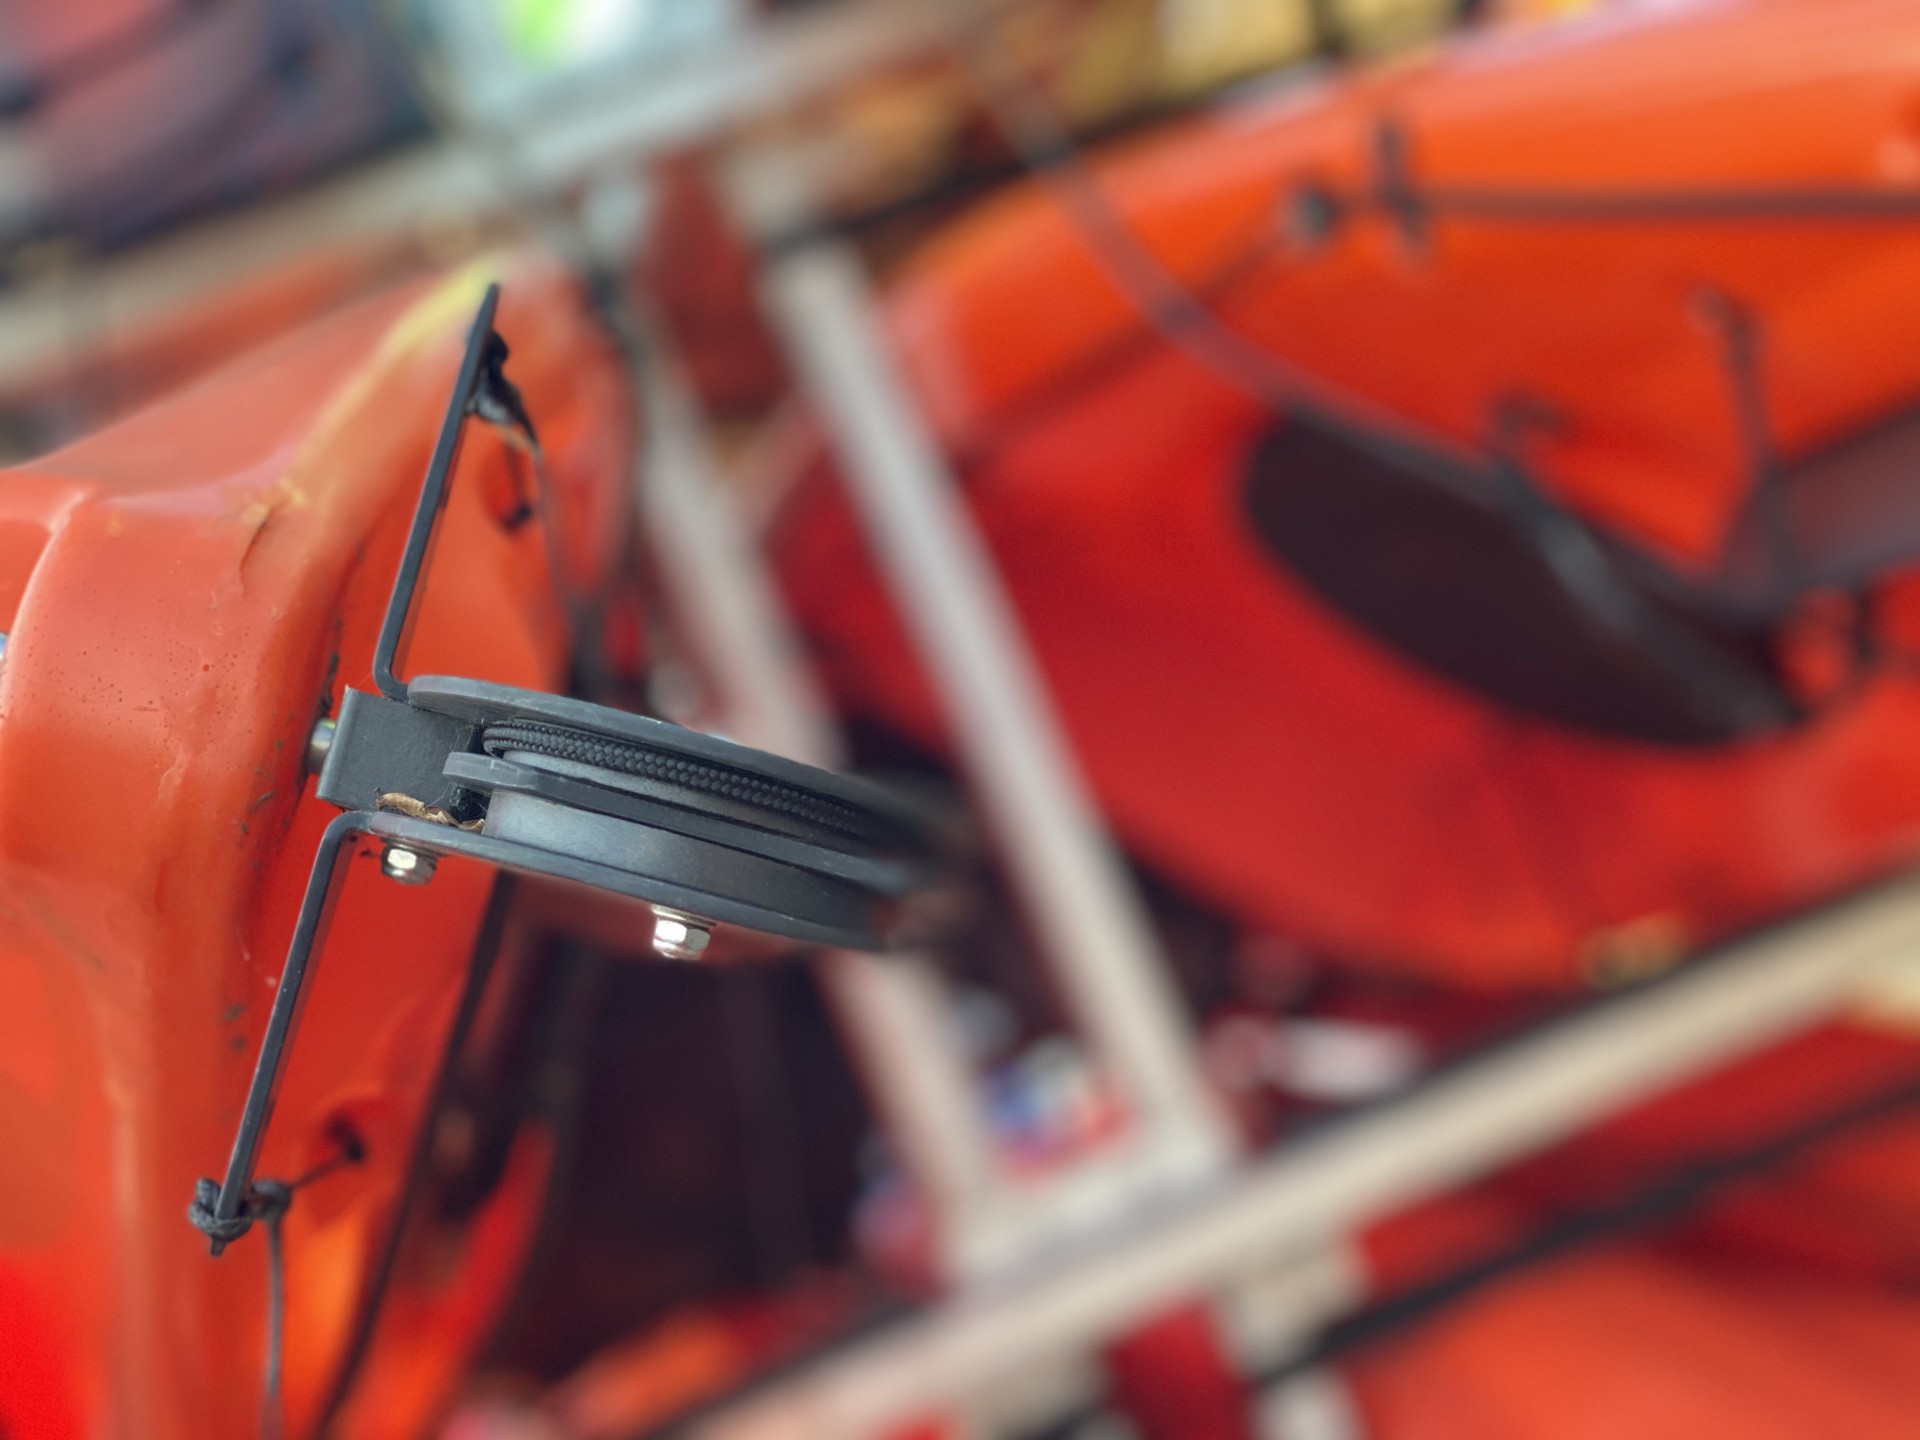 The rudder system on the orange sit-on-top kayaks of NOMAD Sea Kayaking.